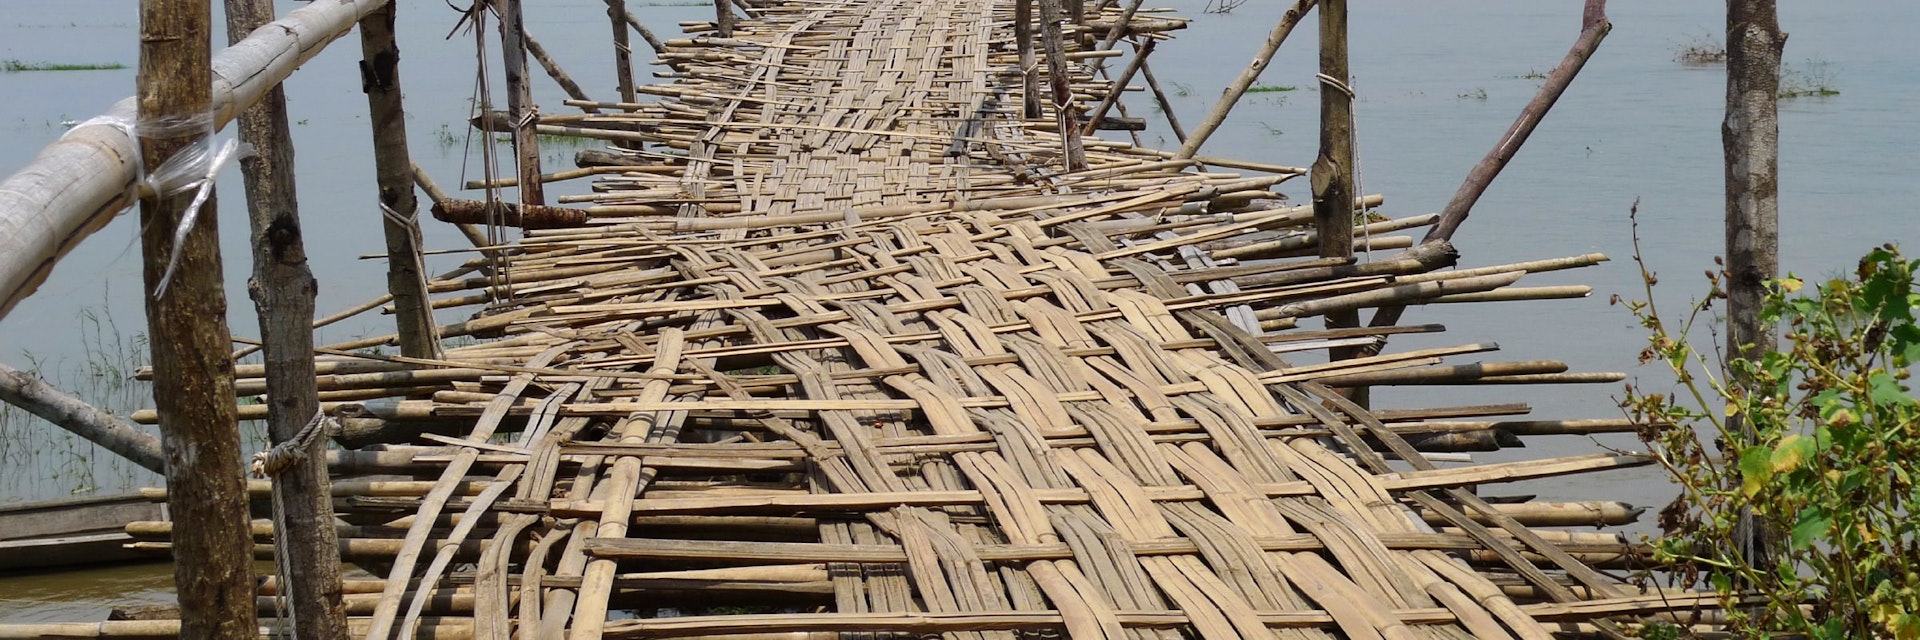 View of Bamboo Bridge in Bhamo